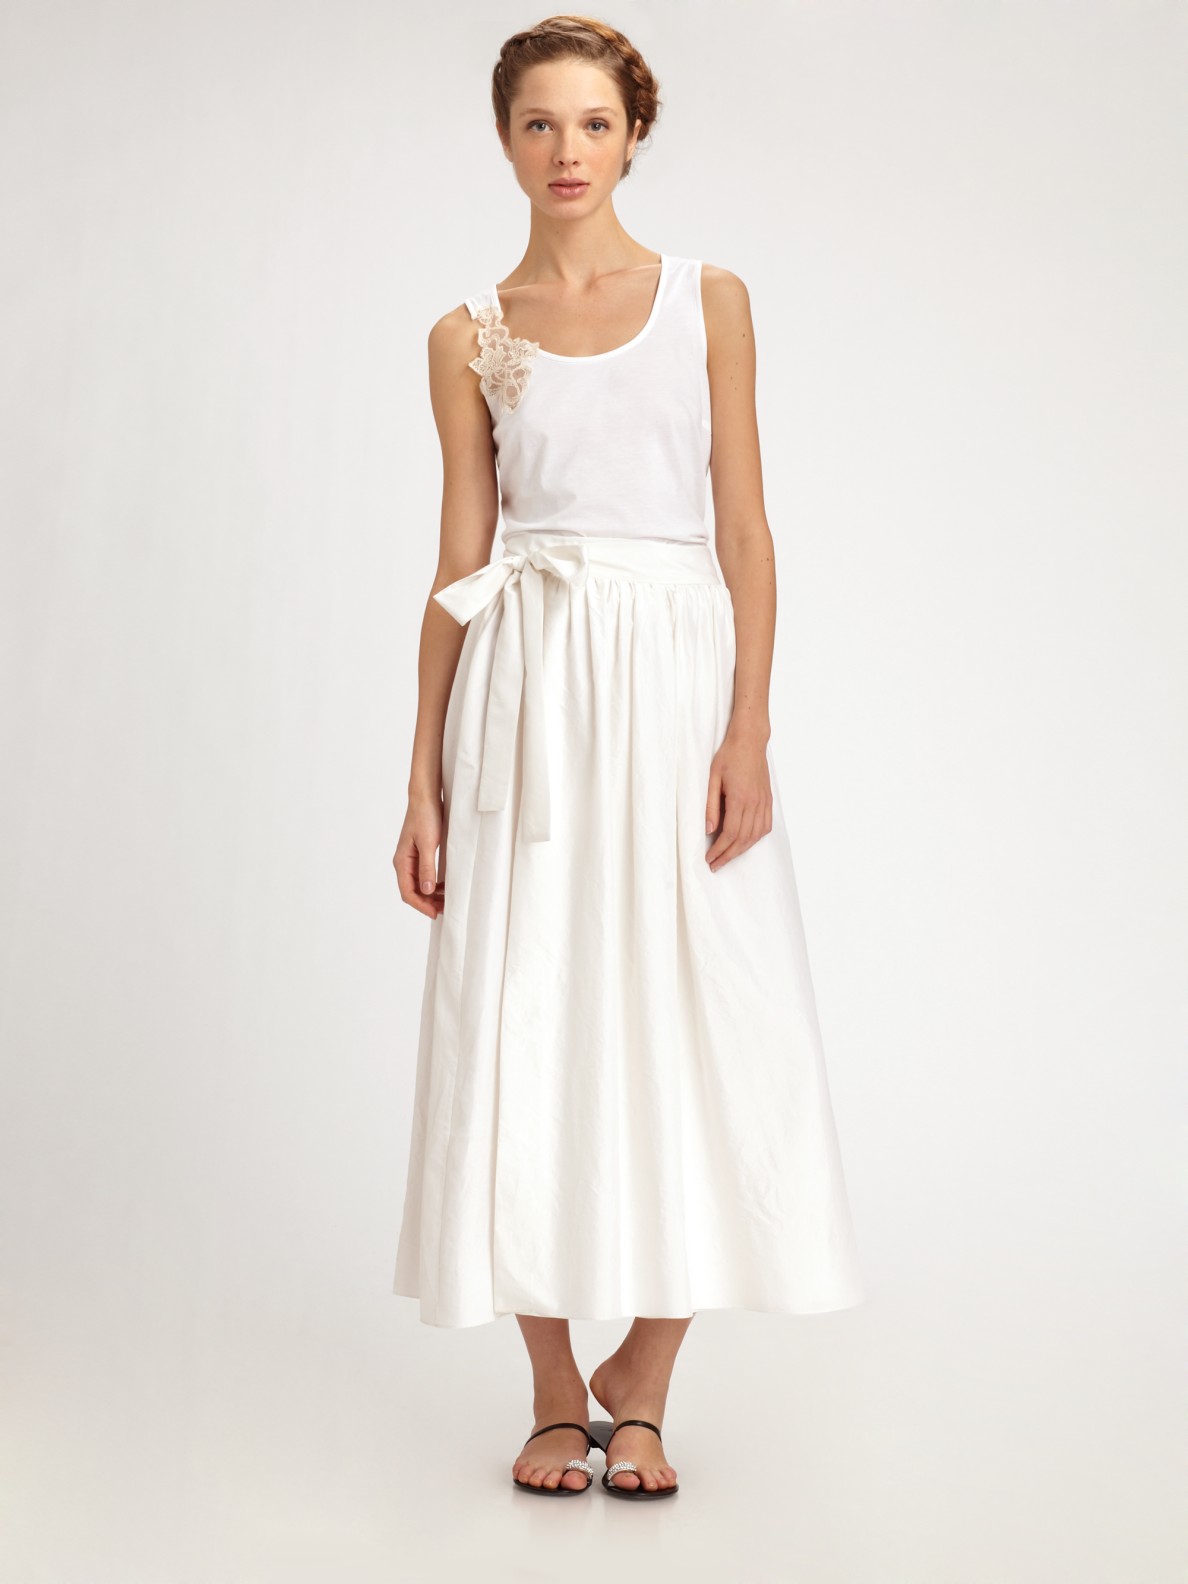 Behnaz Sarafpour Silk Taffeta Wrap Skirt in White | Lyst